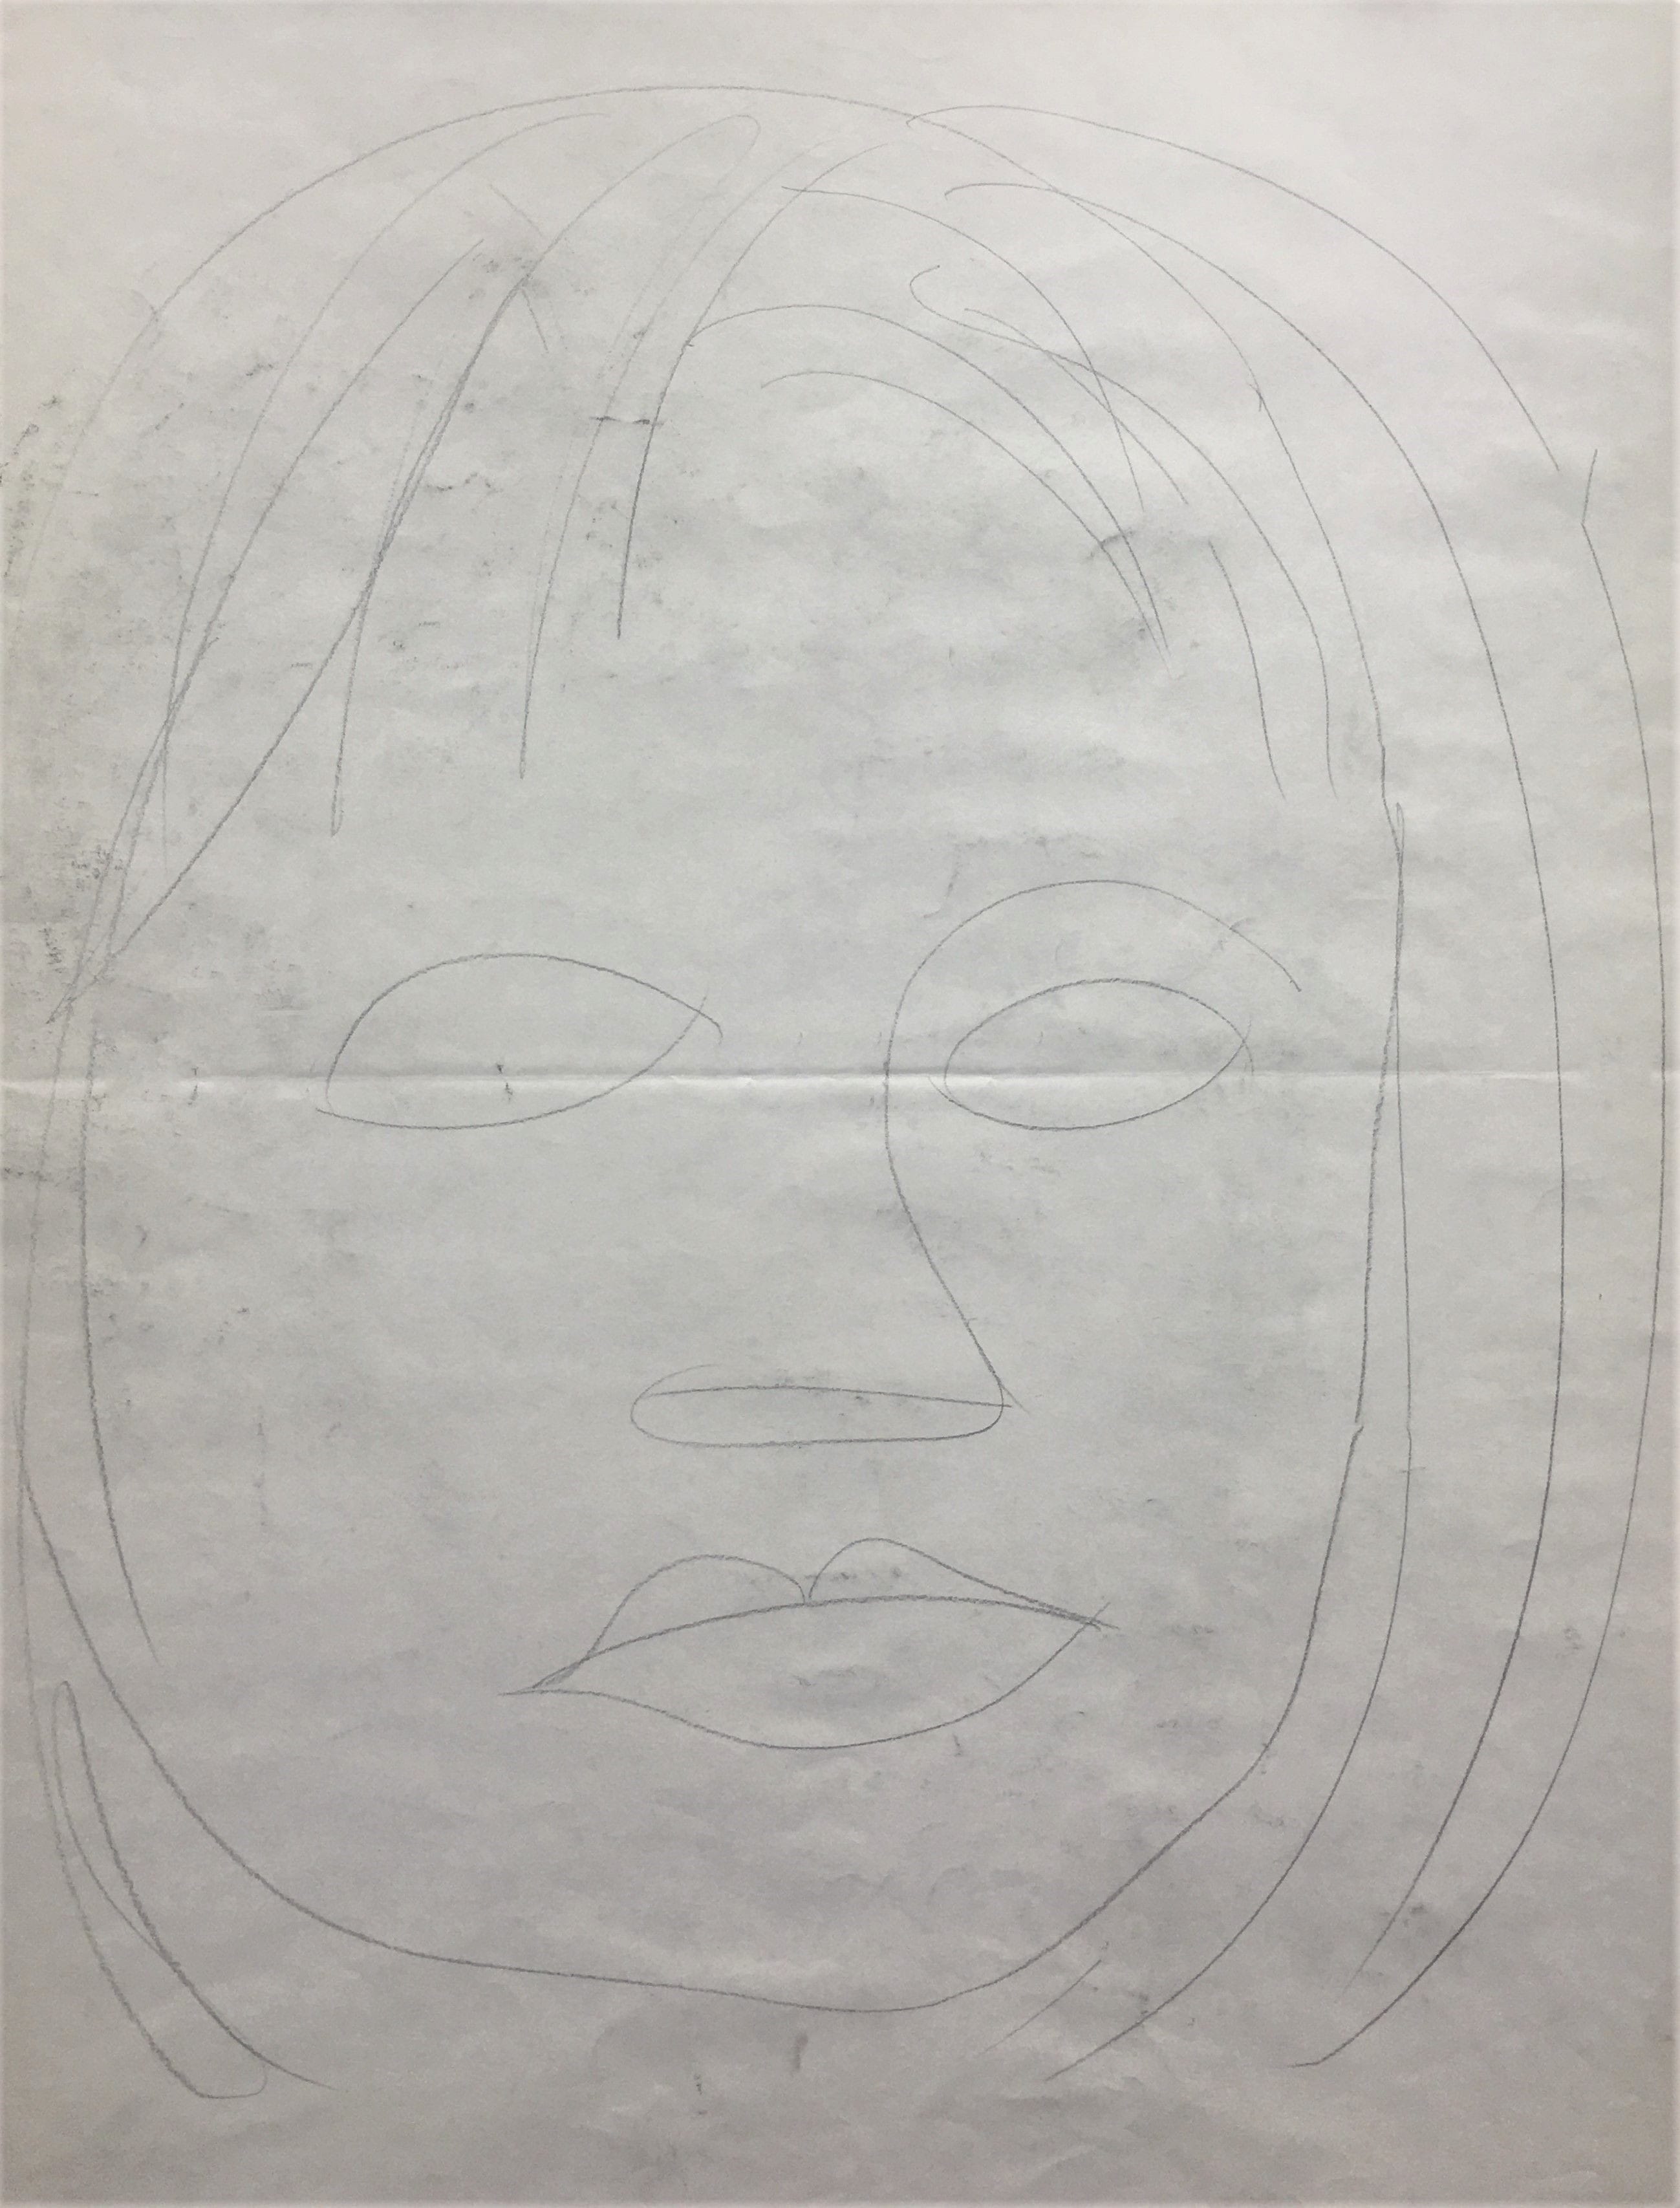 Quick Sketch Self-Portrait, 1990
Pencil on Paper
18"W x 24"H, Walli White, artist